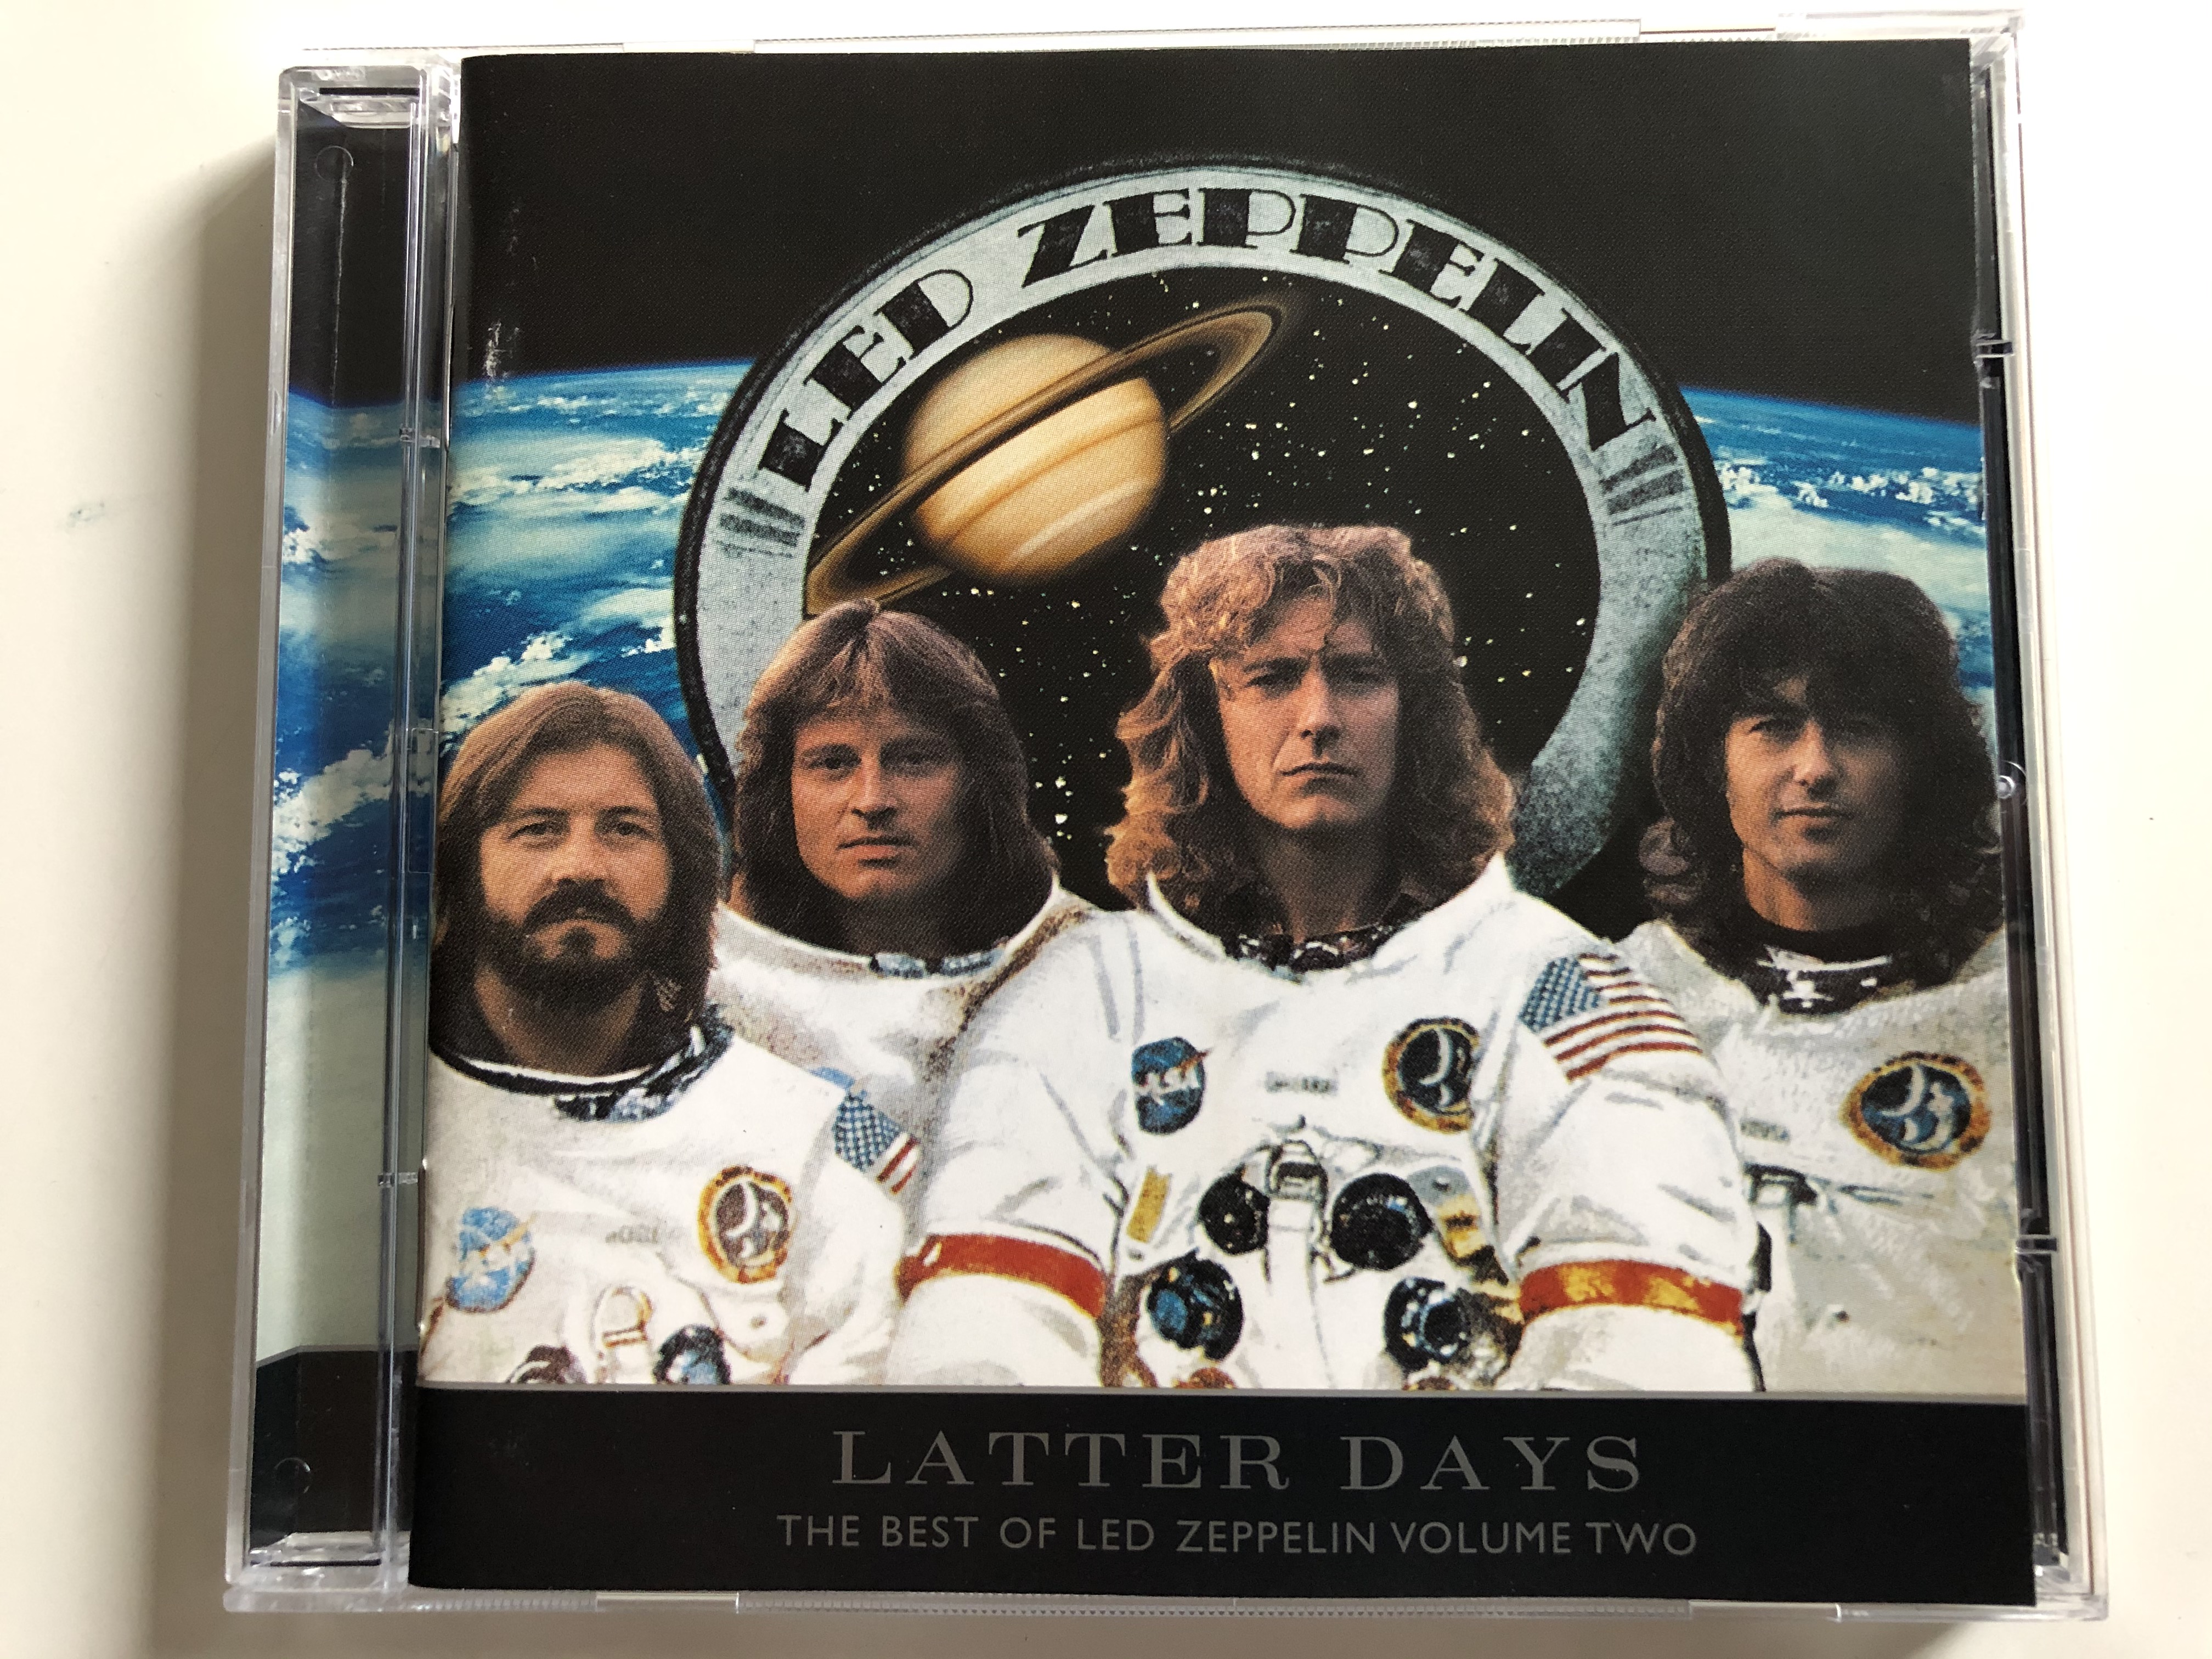 Led Zeppelin ‎– Latter Days: The Best Of Led Zeppelin Volume Two / Atlantic  ‎Audio CD 2000 / 7567-83278-2 - bibleinmylanguage